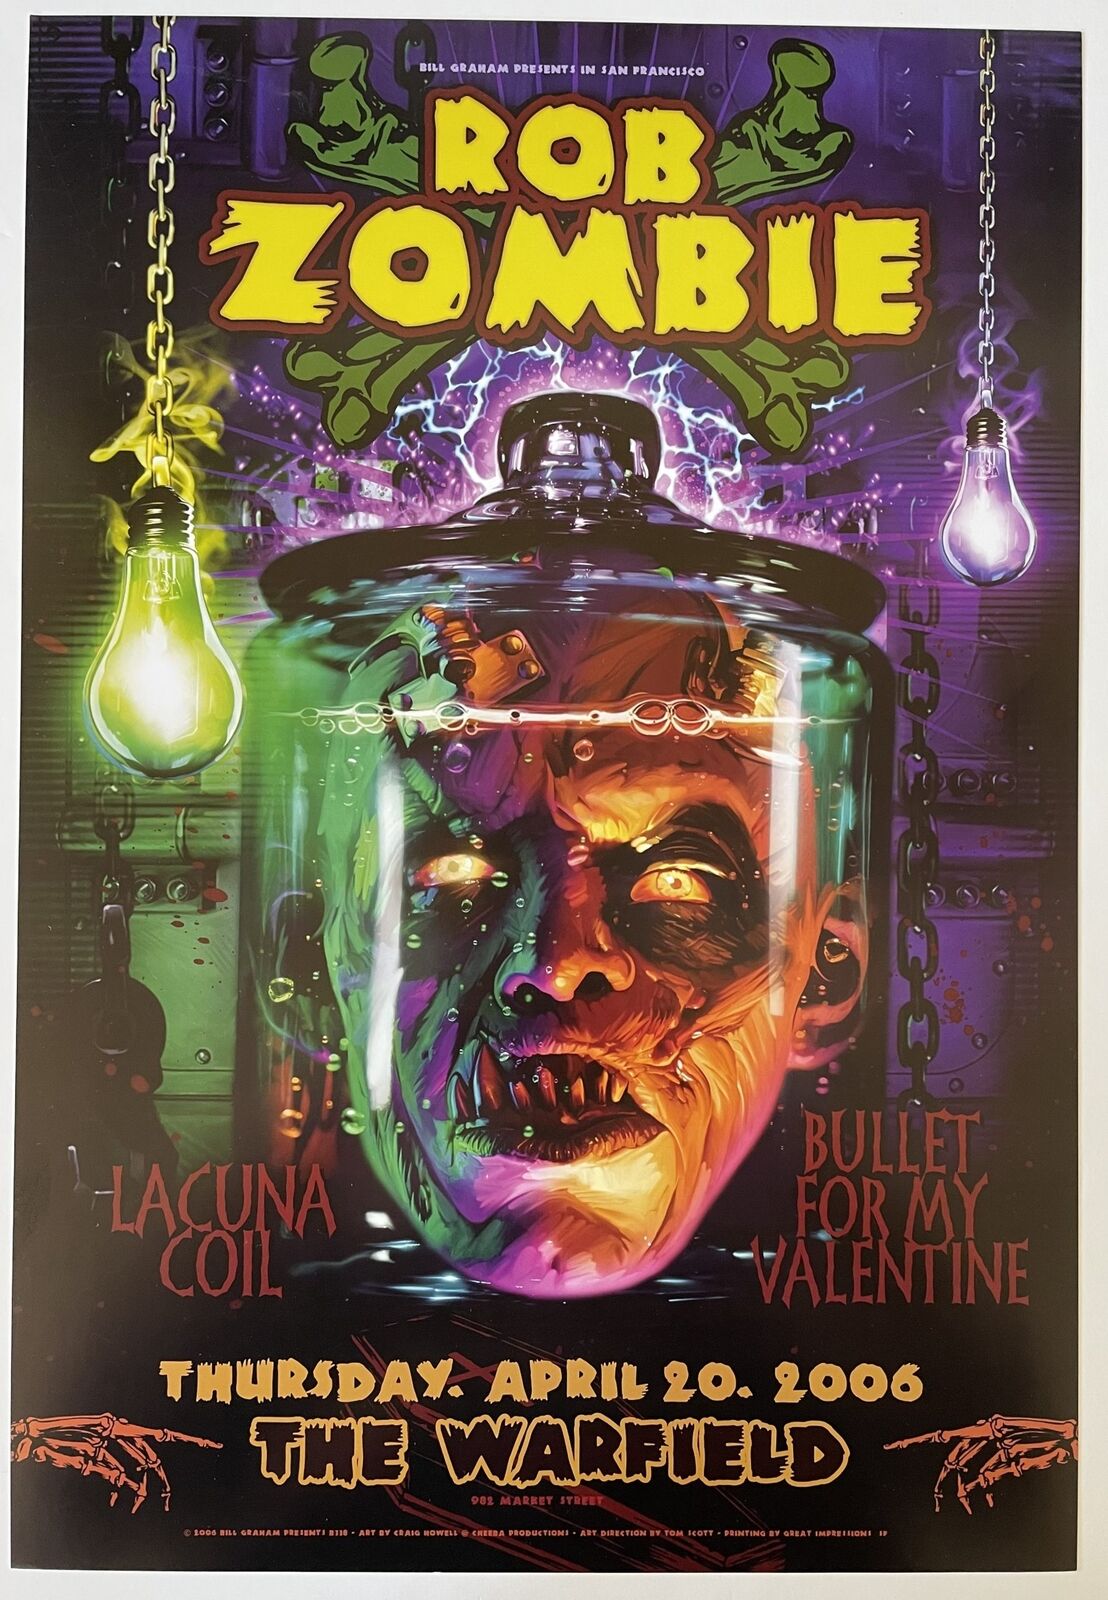 Rob Zombie Concert Poster 2006 Bgp-338 Warfield